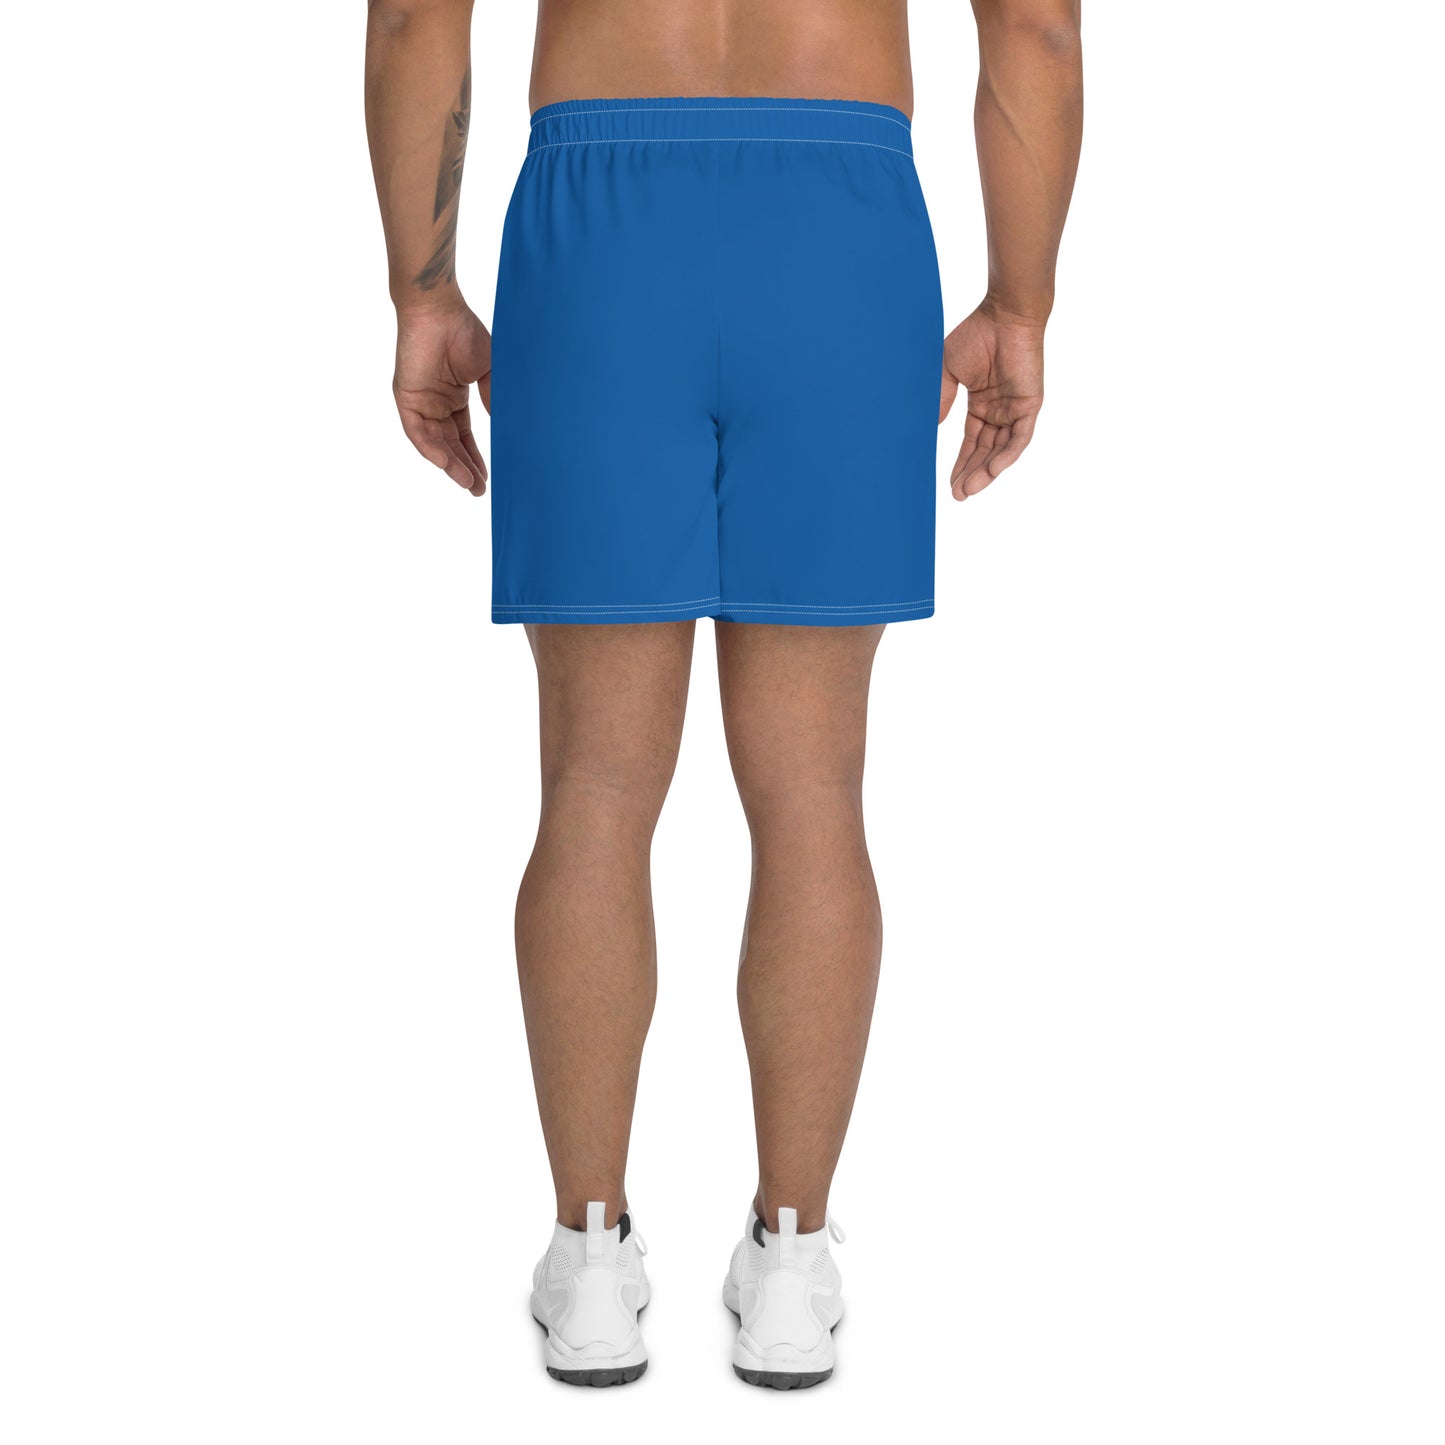 Tampa Phenoms Men's Athletic Shorts